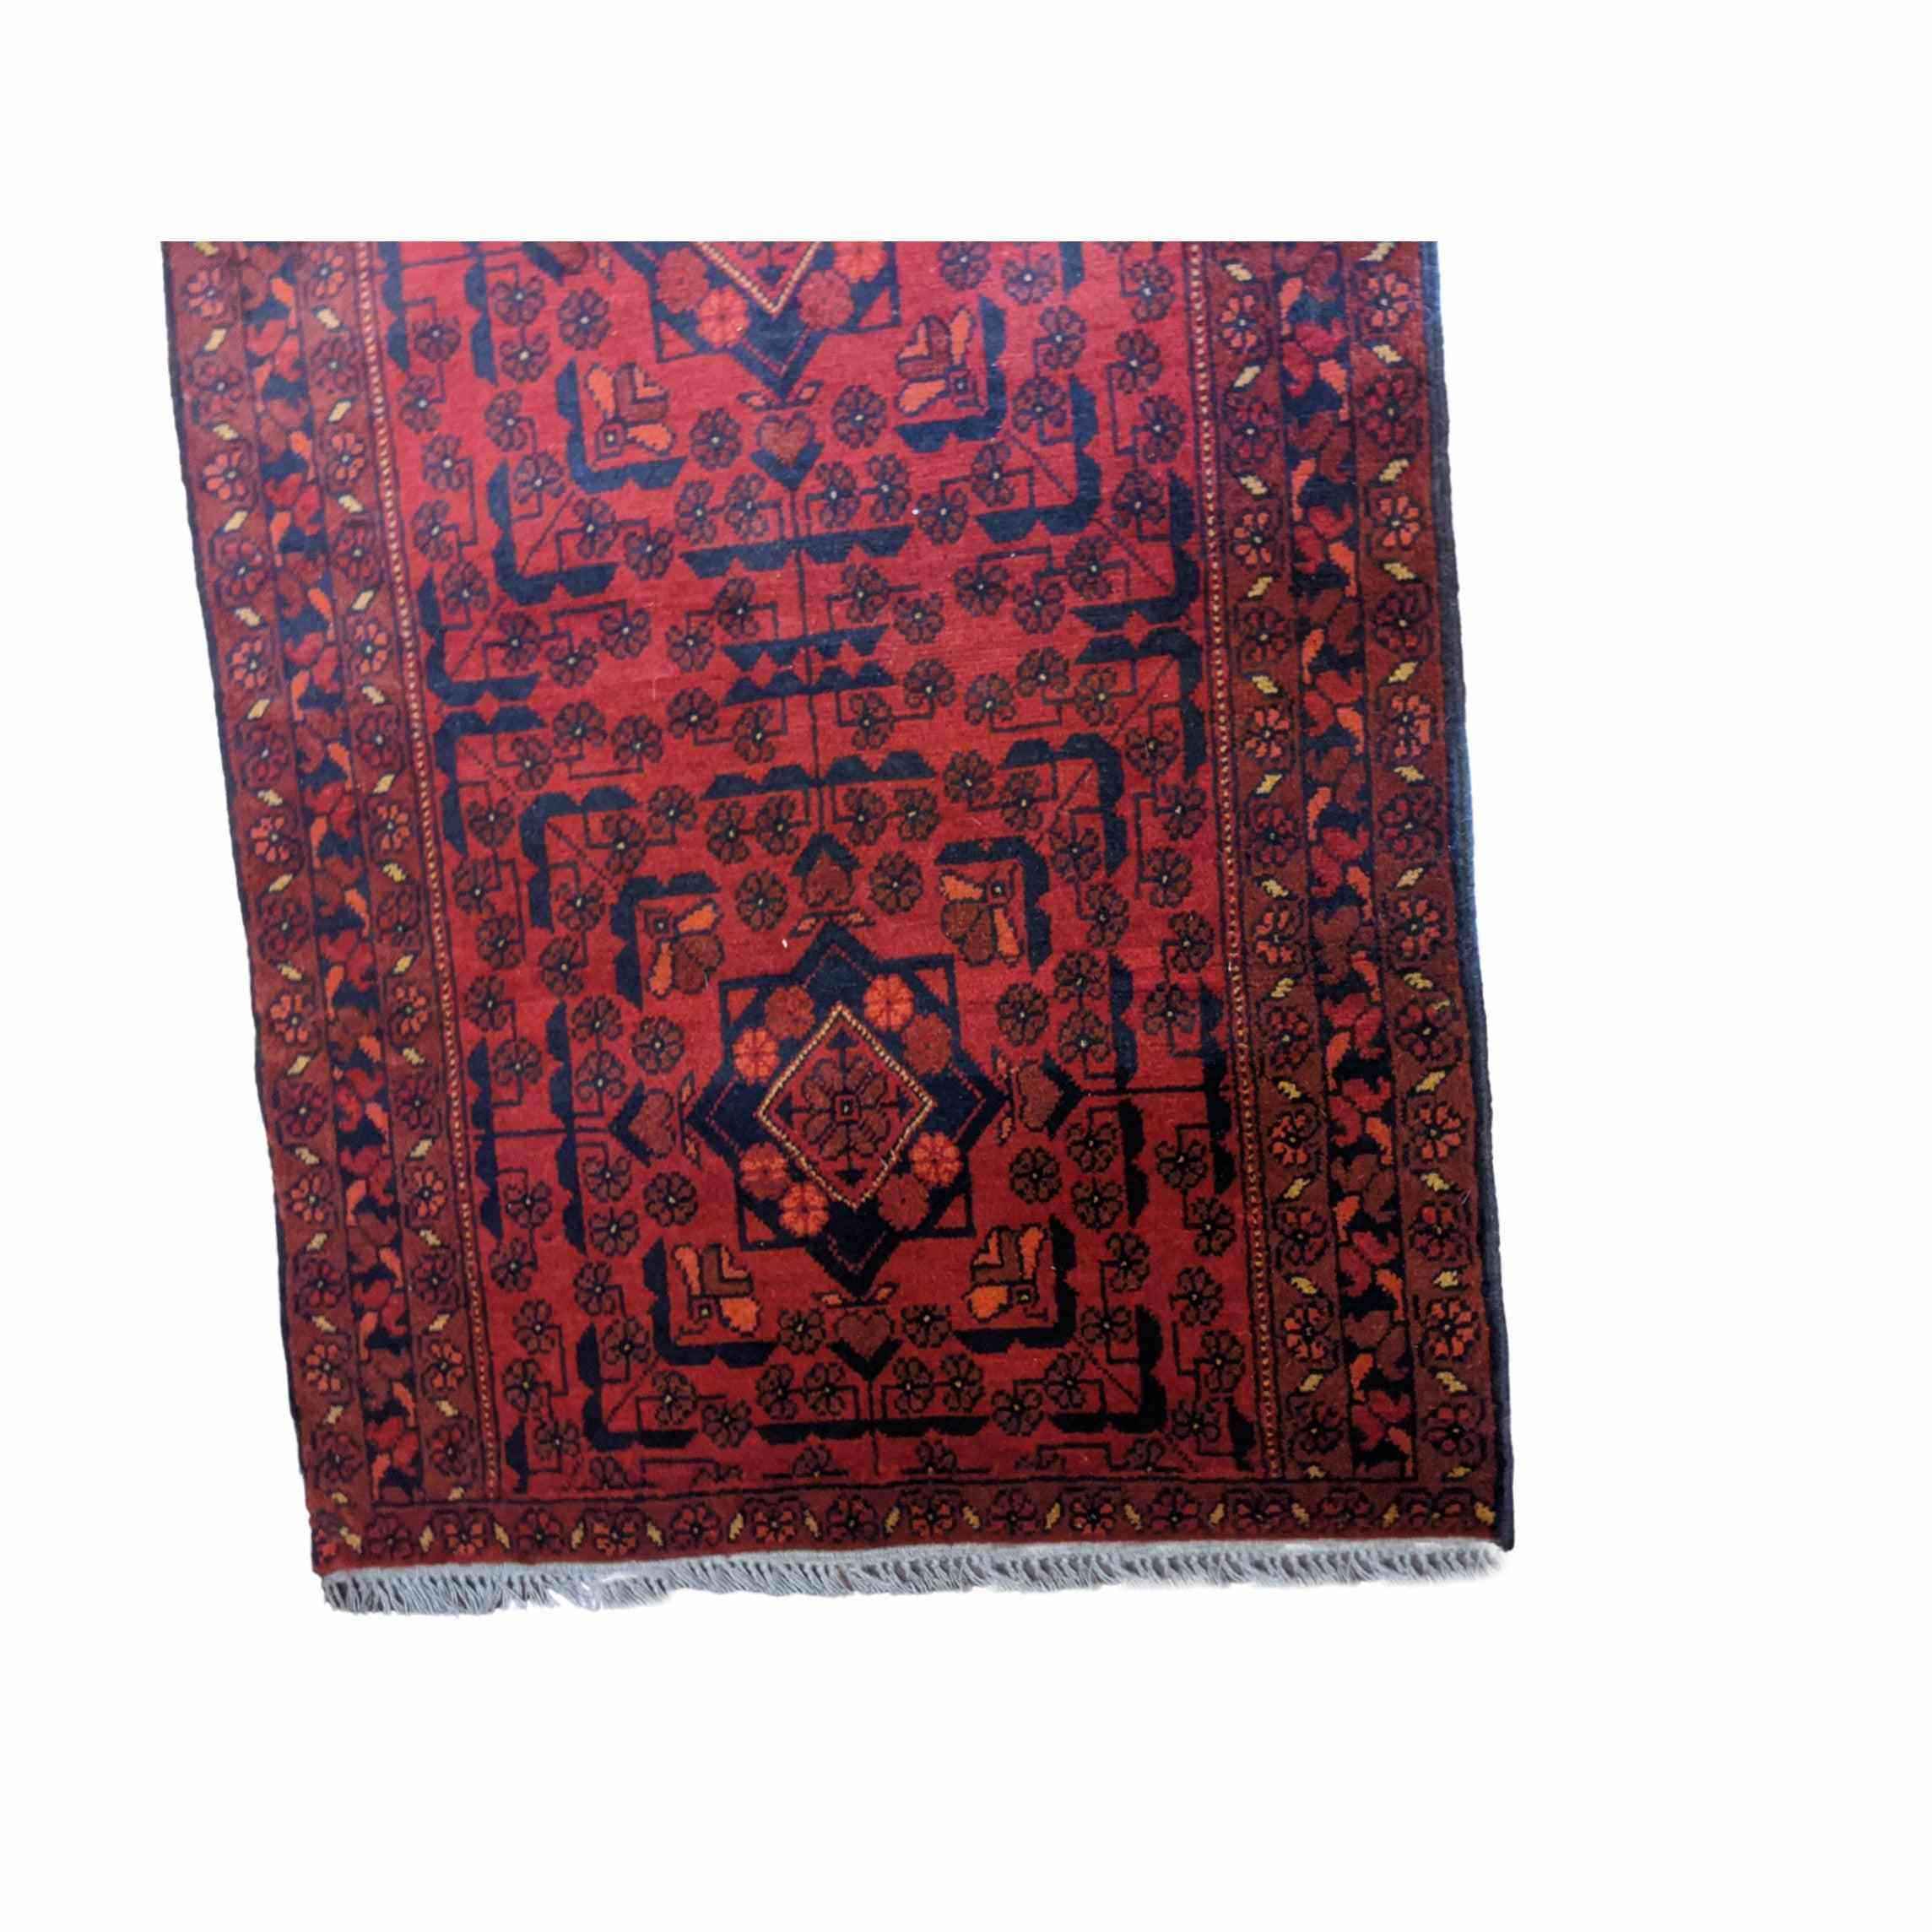 120 x 81 cm Afghan Khan Tribal Red Small Rug - Rugmaster